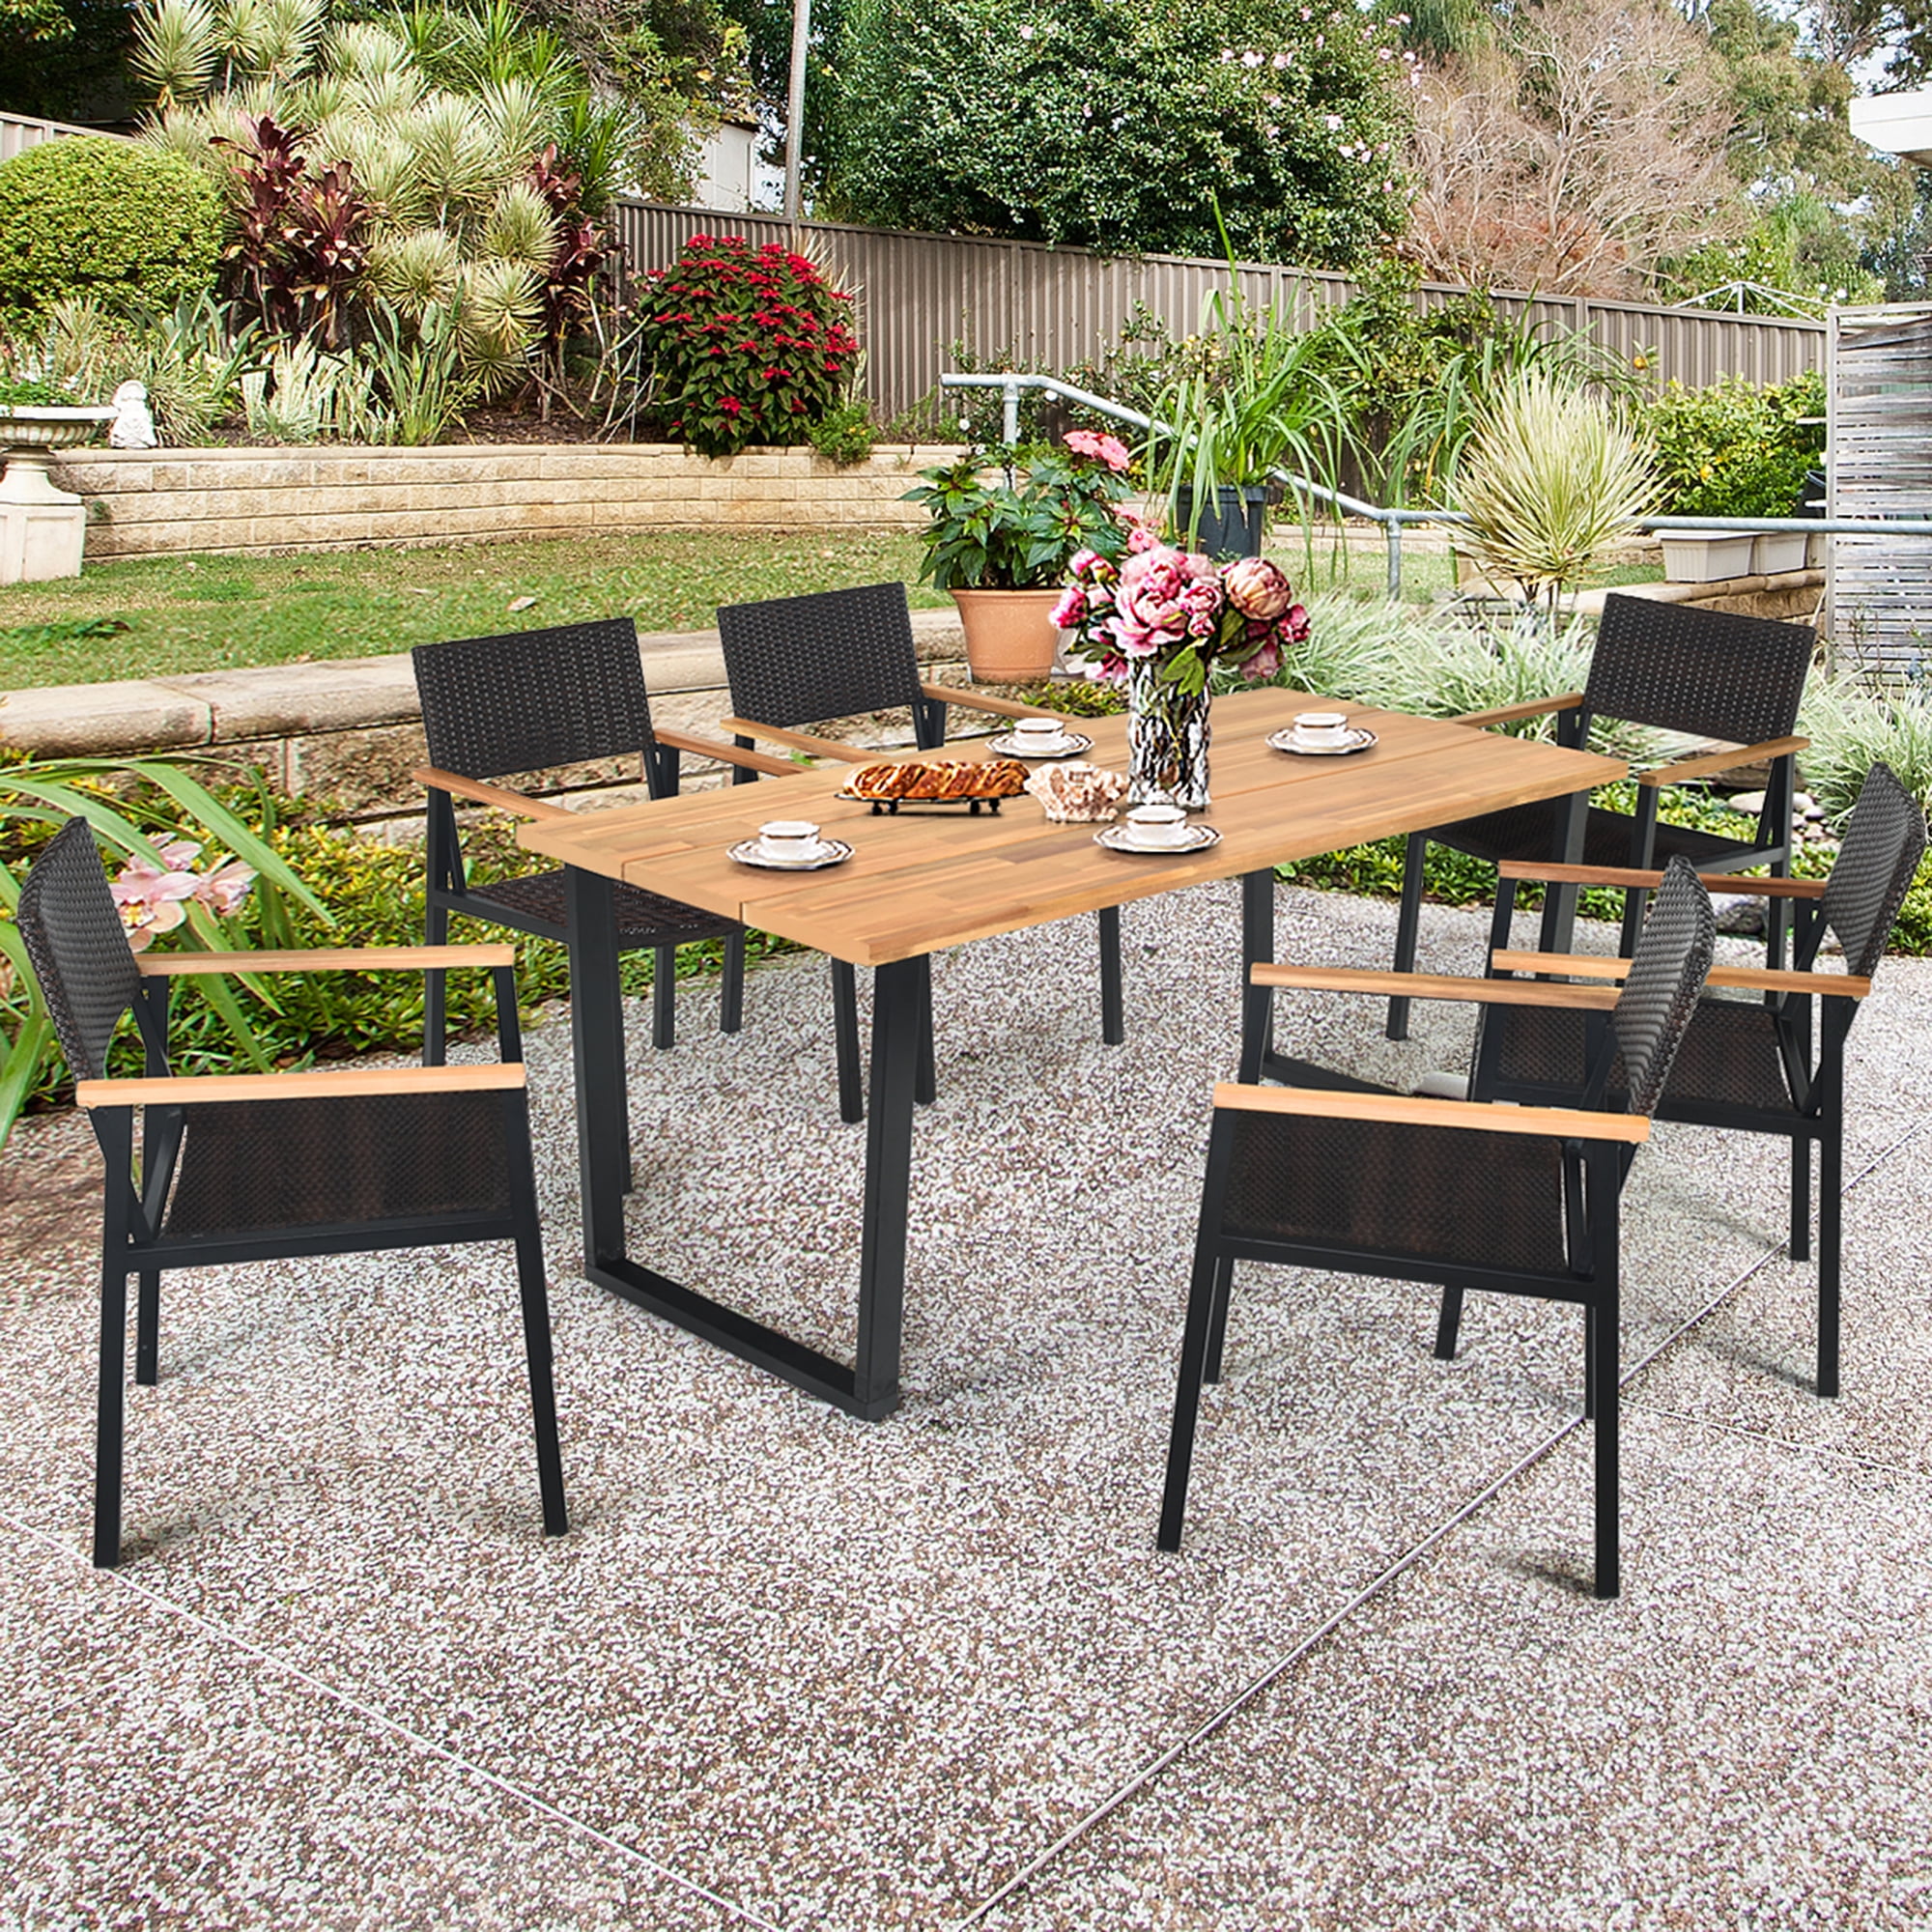 Gymax 7pcs Patio Garden Dining Set Outdoor Furniture W Umbrella Hole Com - Patio Table Sets Outdoor